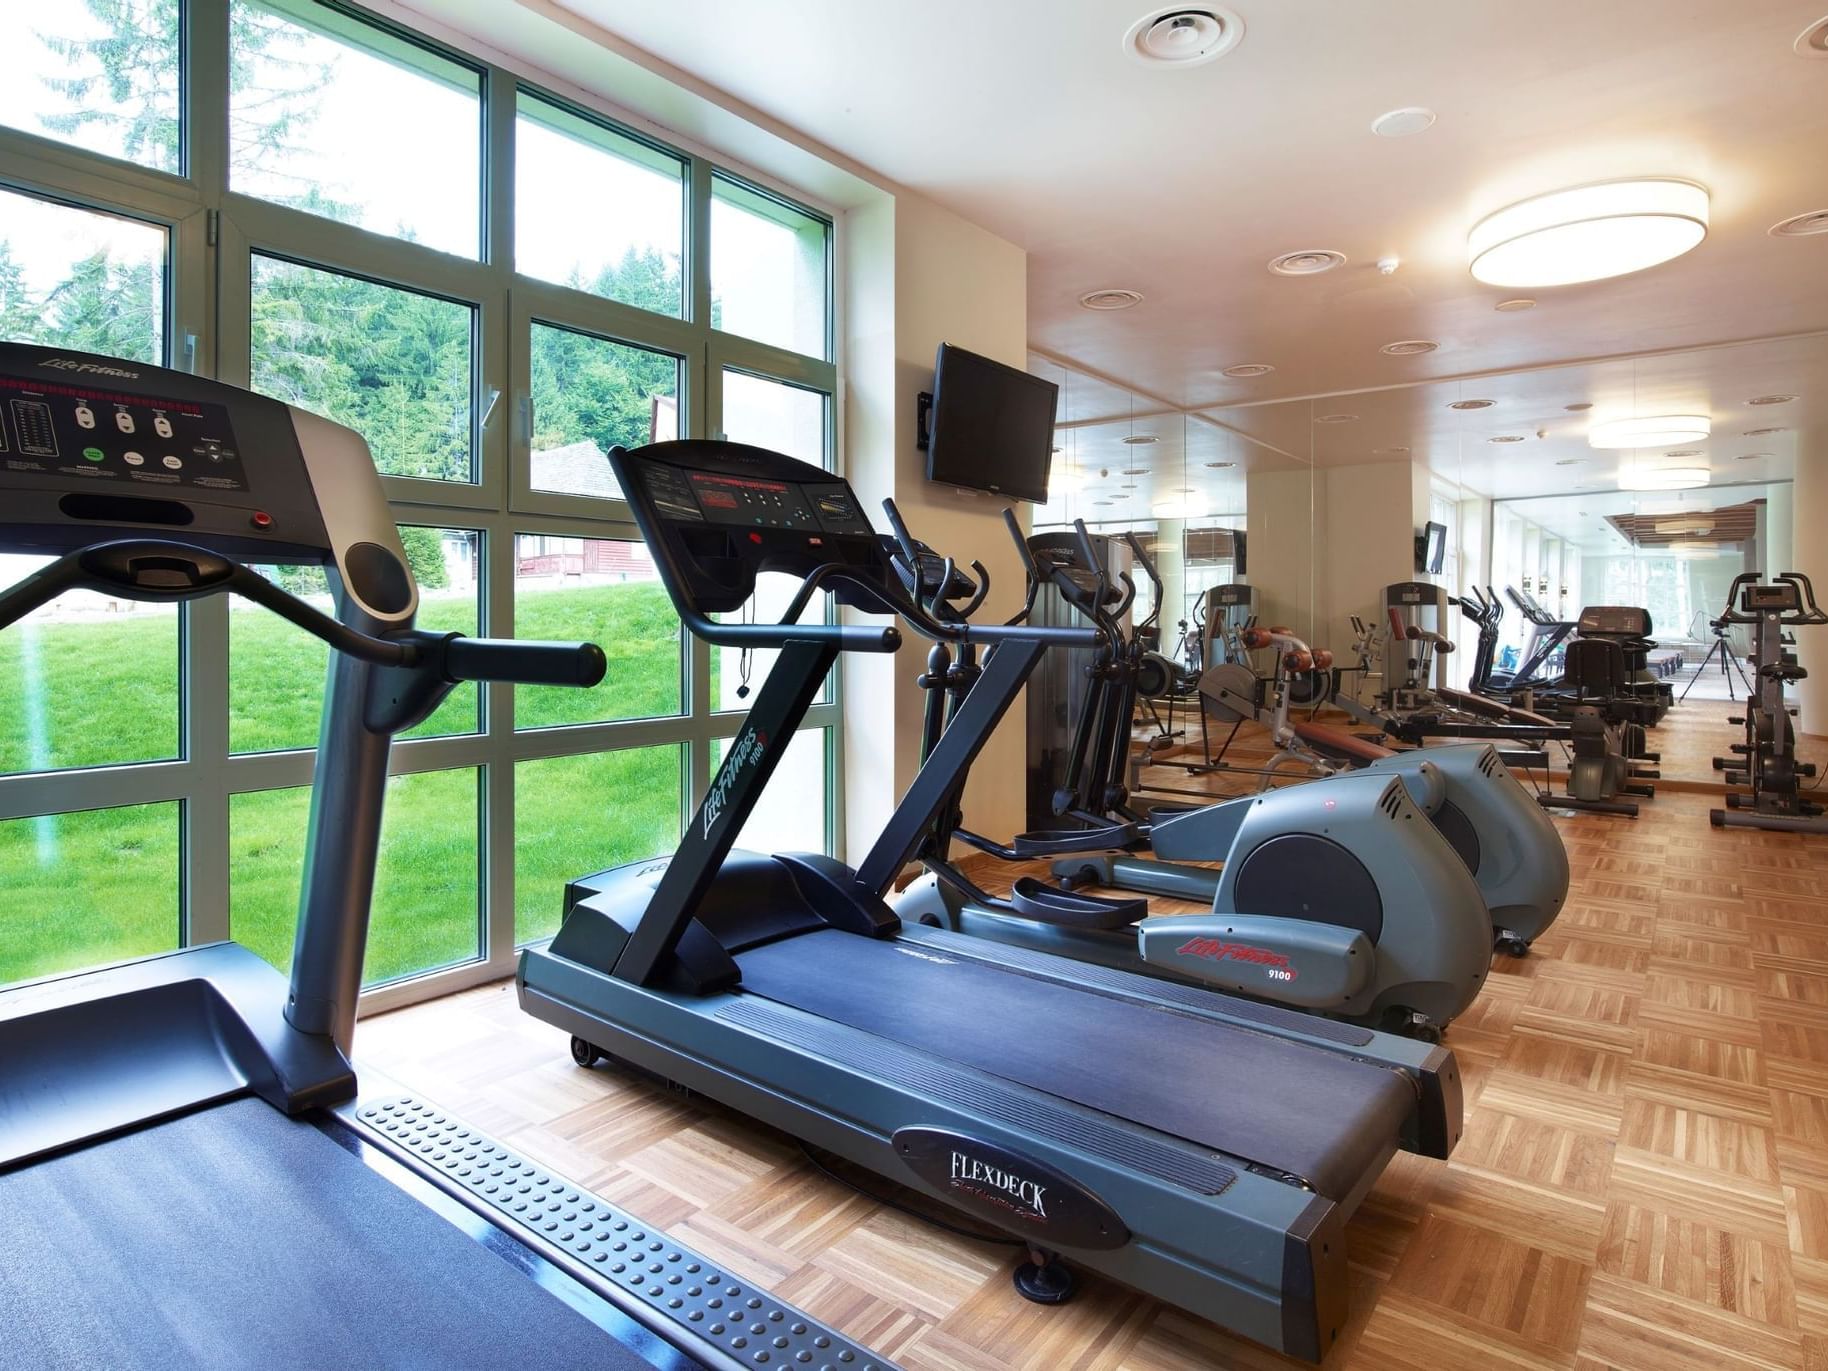 Treadmills in Fitness Room at Ana Hotels Sport